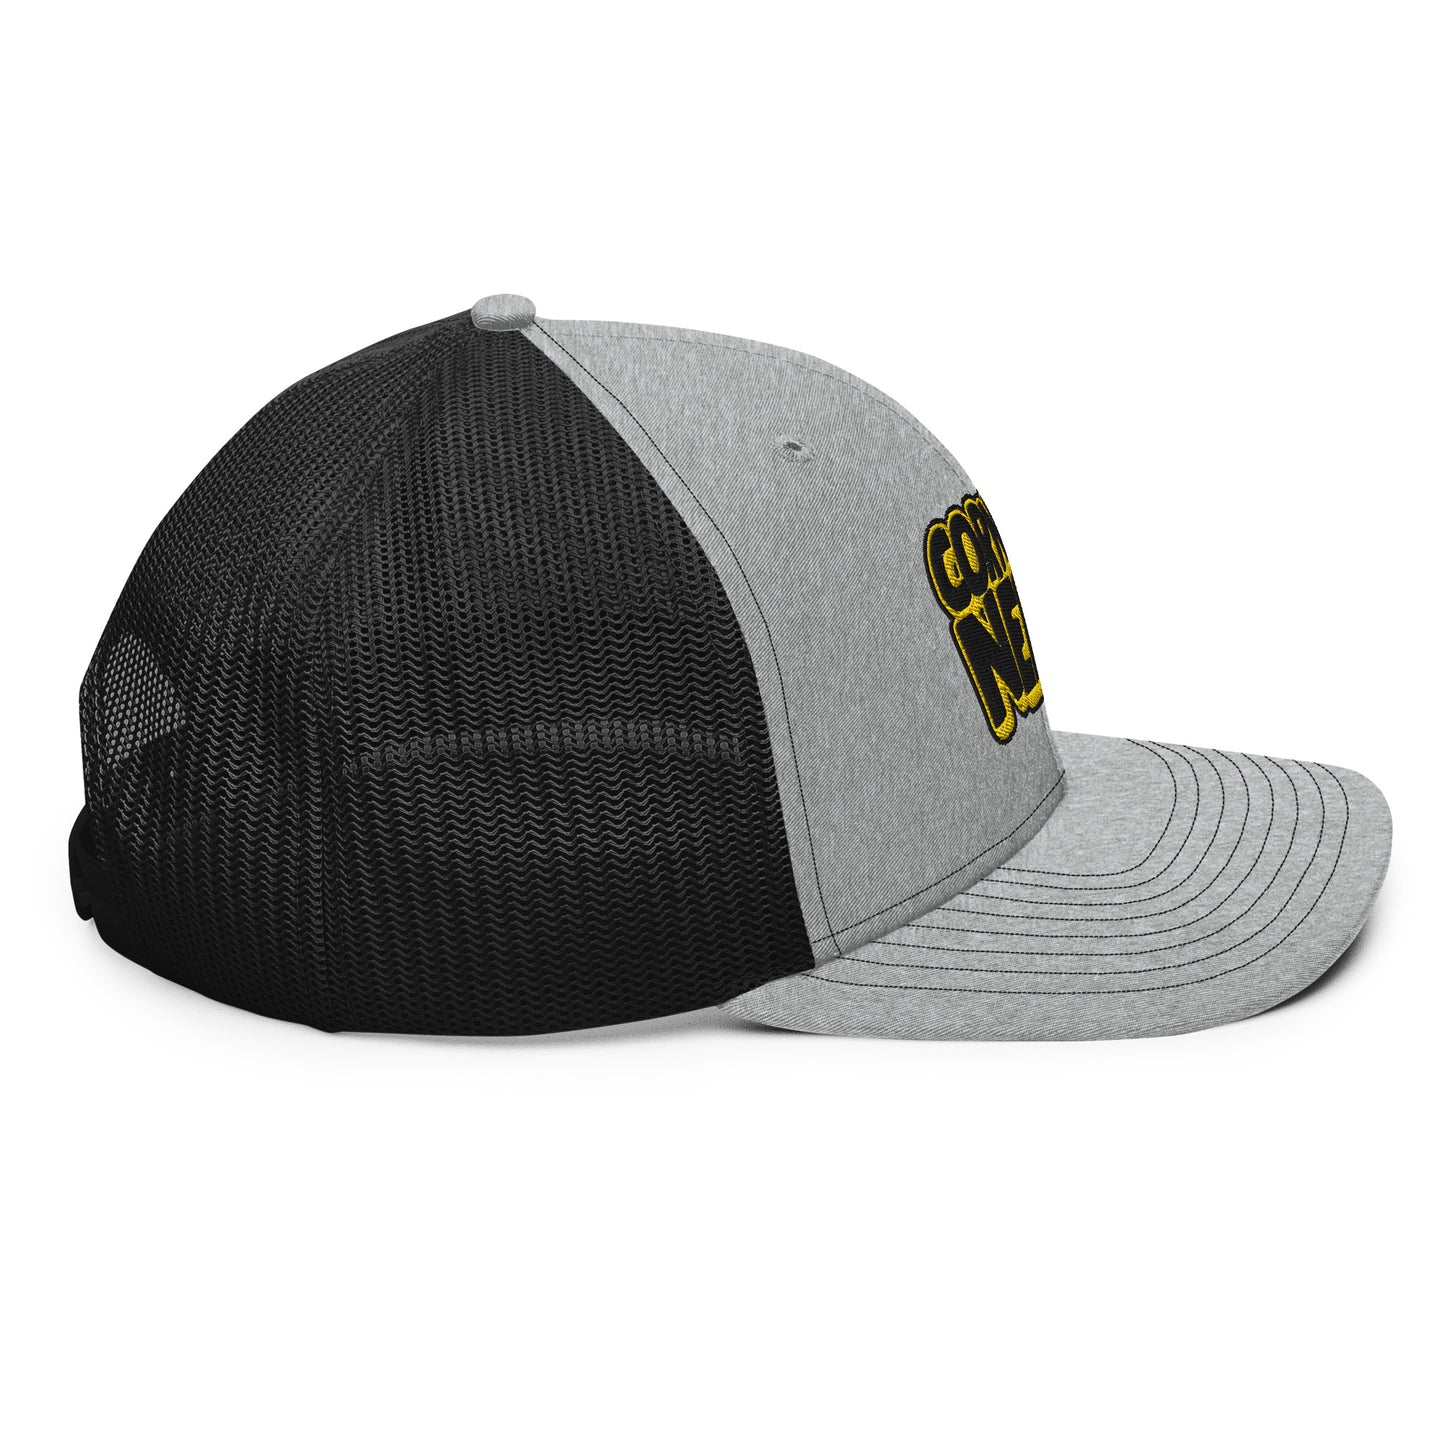 black/yellow nerds logo Richardson 112 snapback Trucker Cap